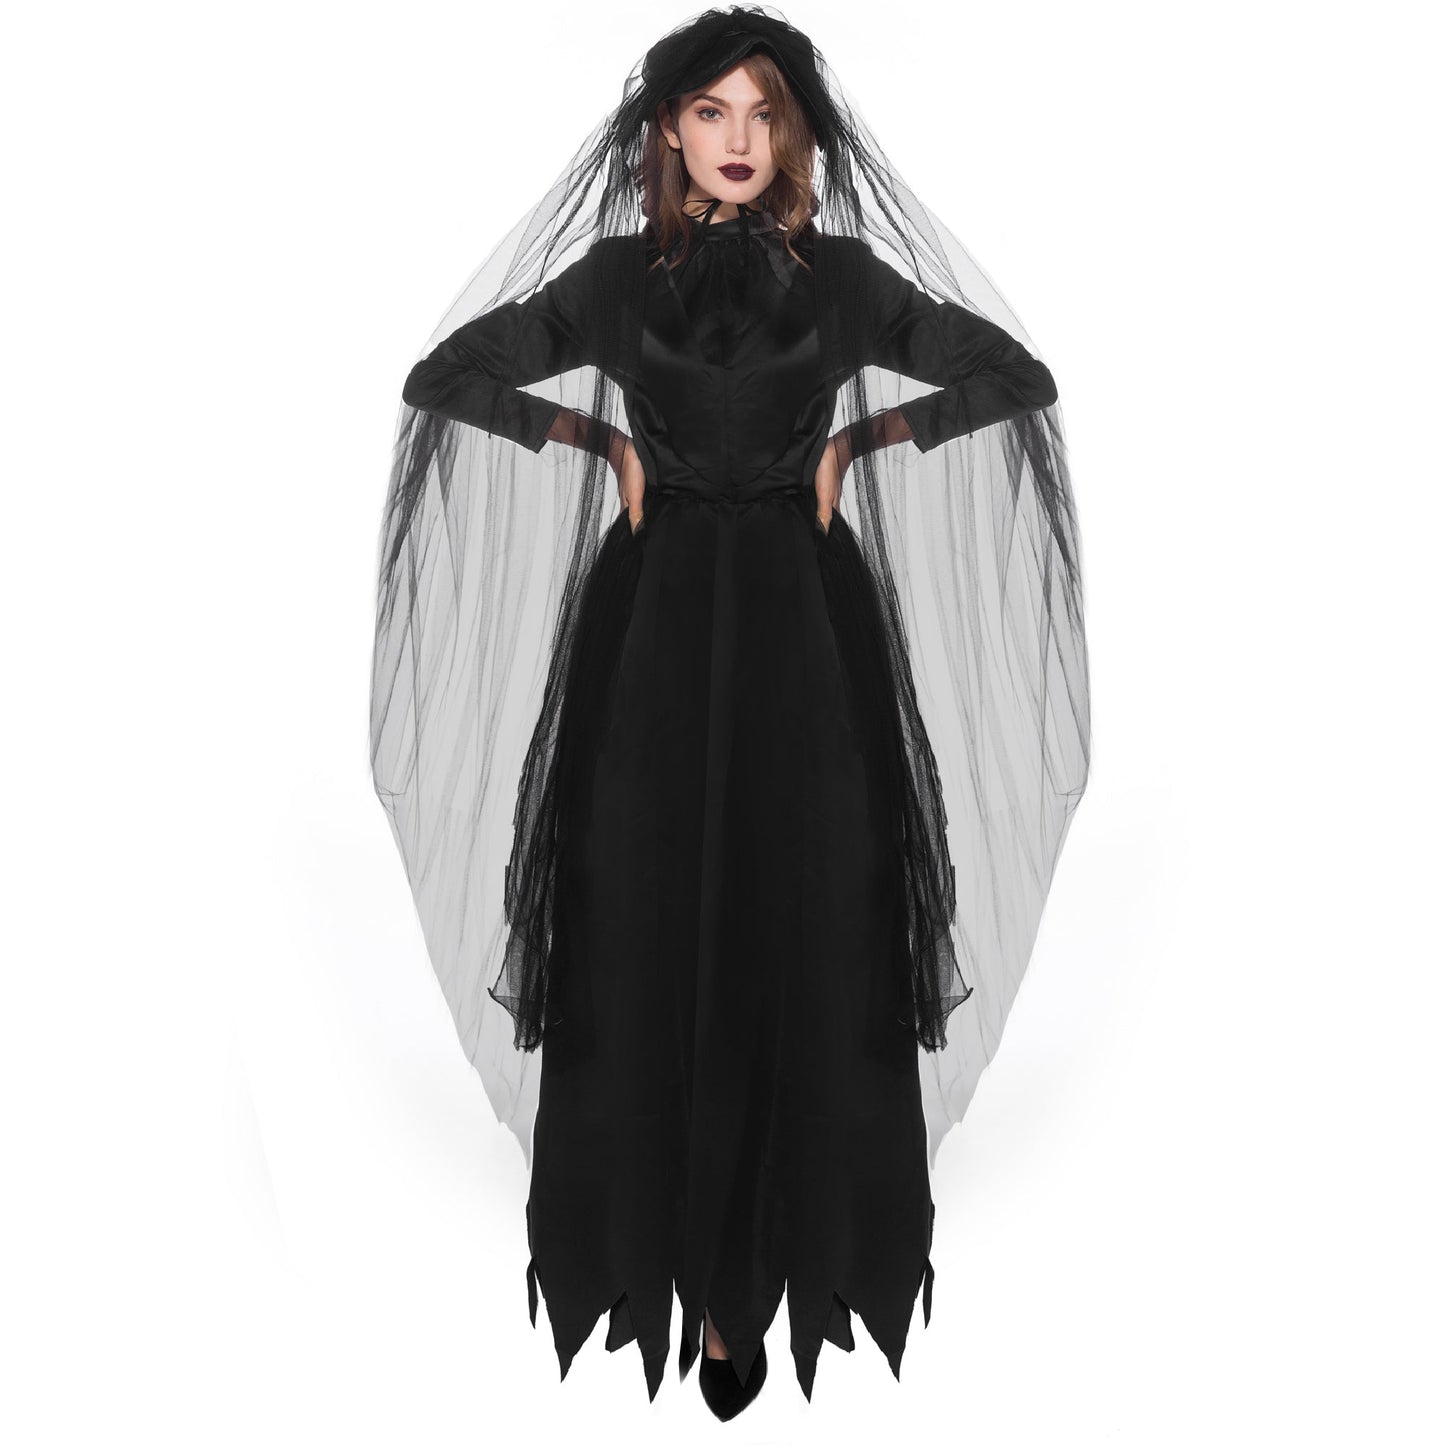 Cosplay witch costume halloween costume